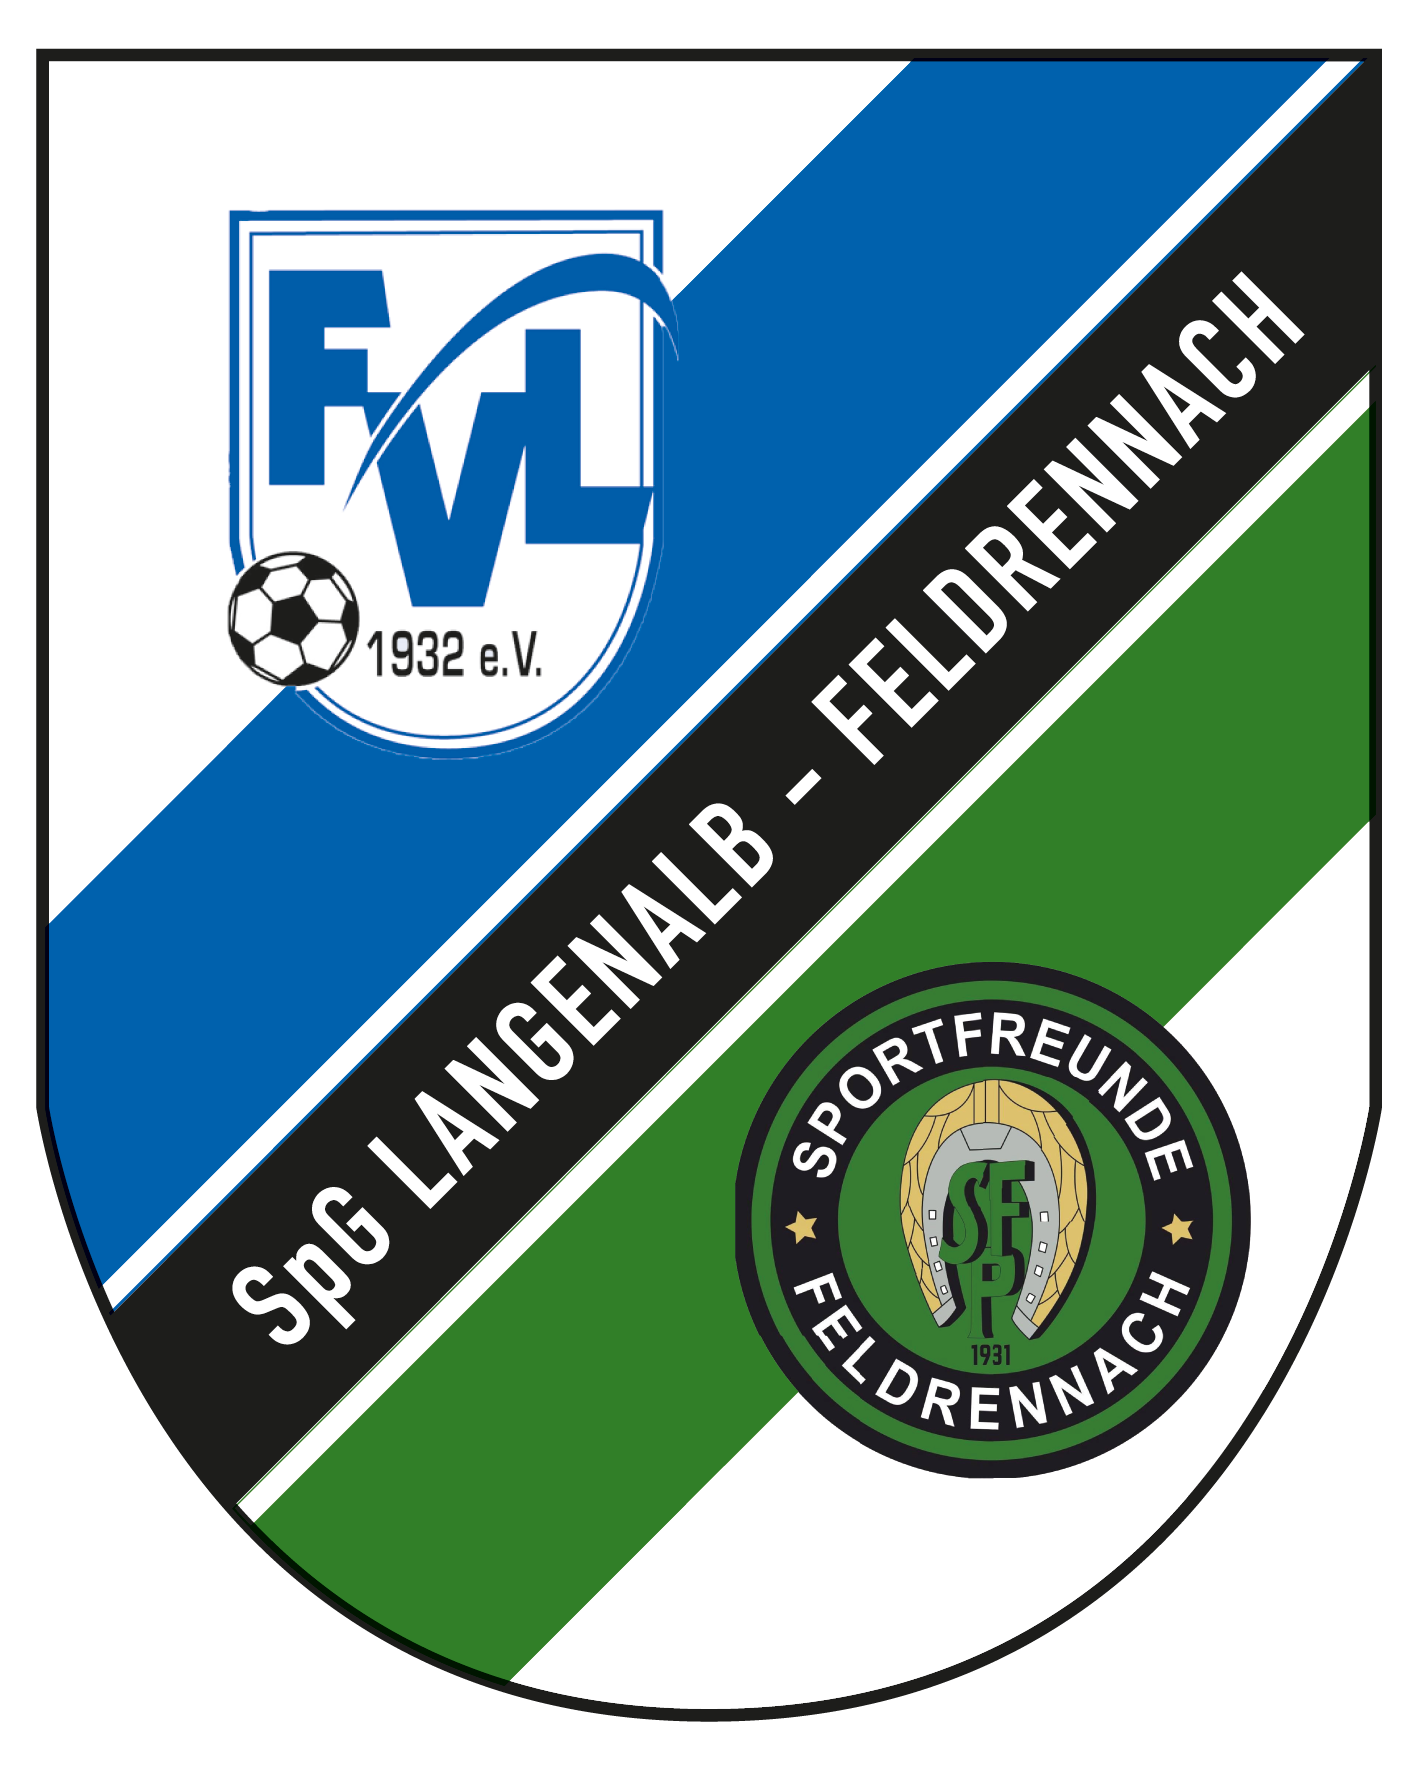 spg-langenalb-feldrennach Logo